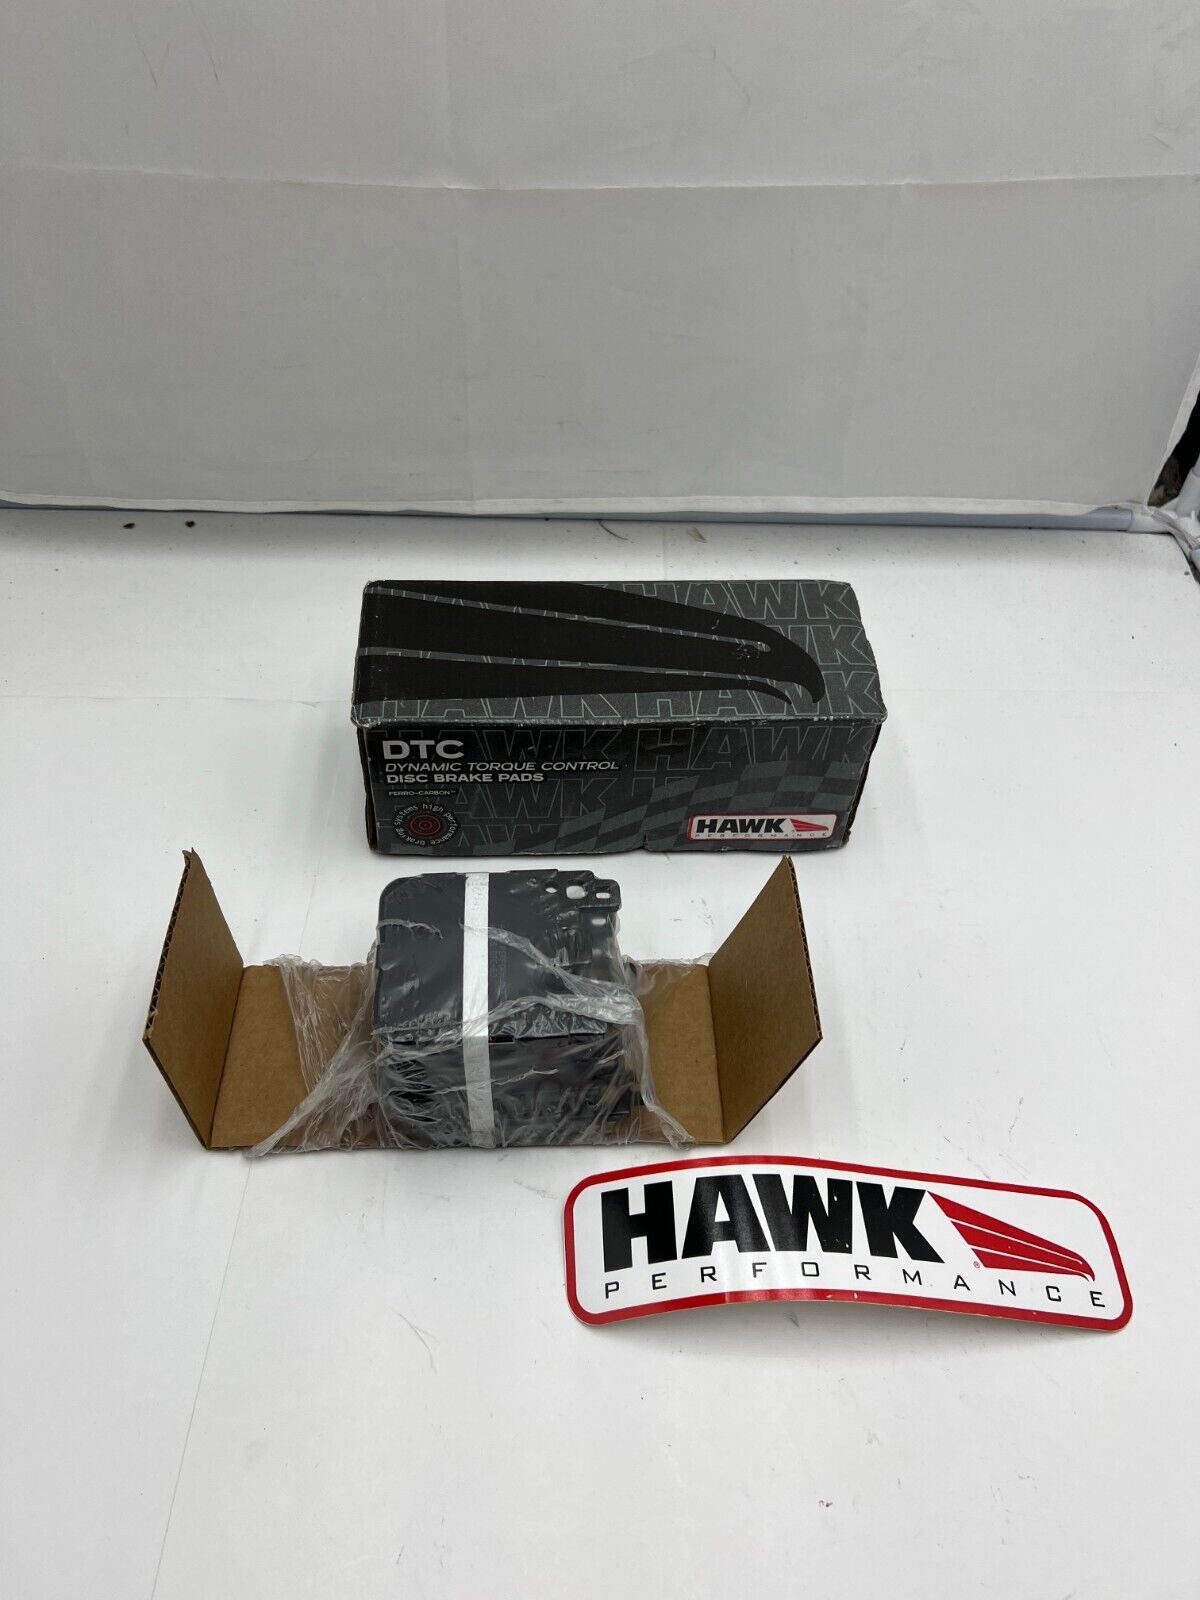 HAWK Dynamic Torque Control Disc Brake Pad HB766 G.624 D1656-8885 DTC-60